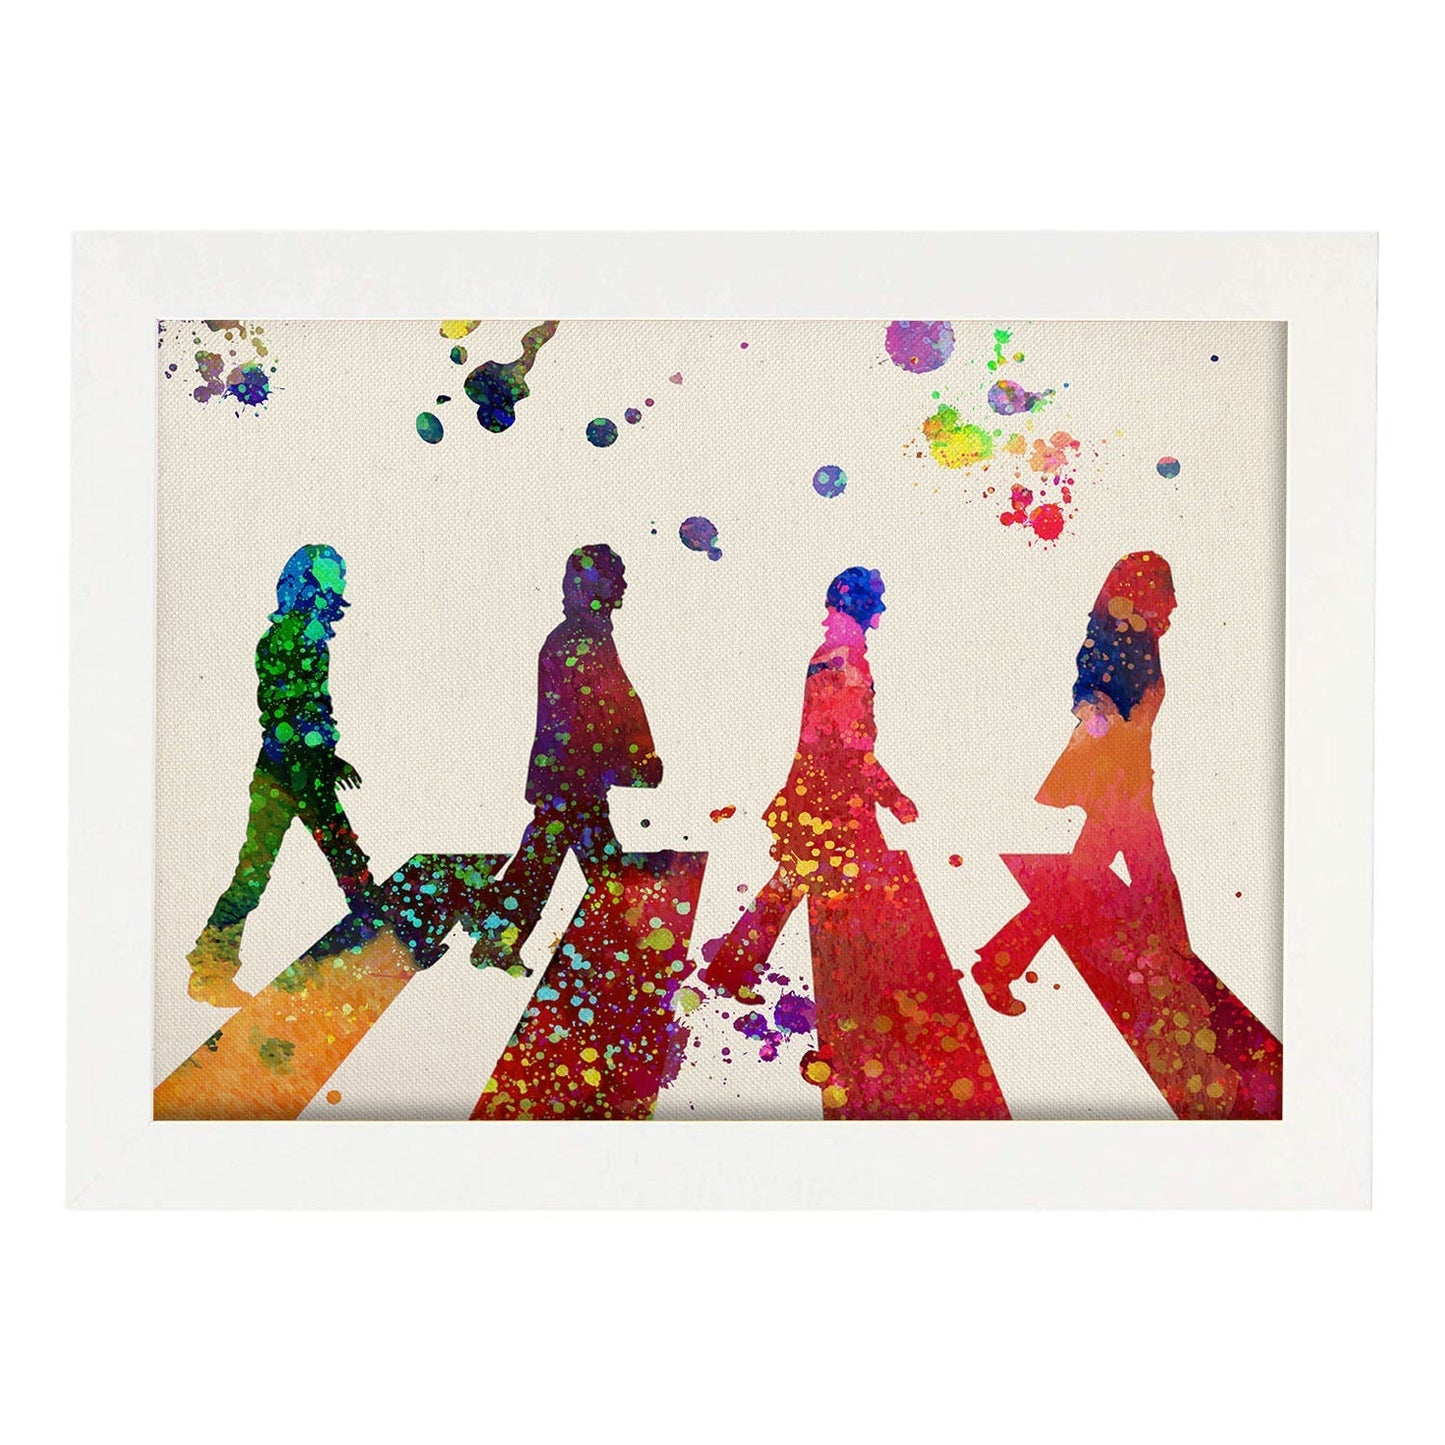 Lámina de la banda de música The Beatles (paso de cebra) en . Poster estilo explosión de color. Lámina de papel 250 gr.-Artwork-Nacnic-A4-Marco Blanco-Nacnic Estudio SL